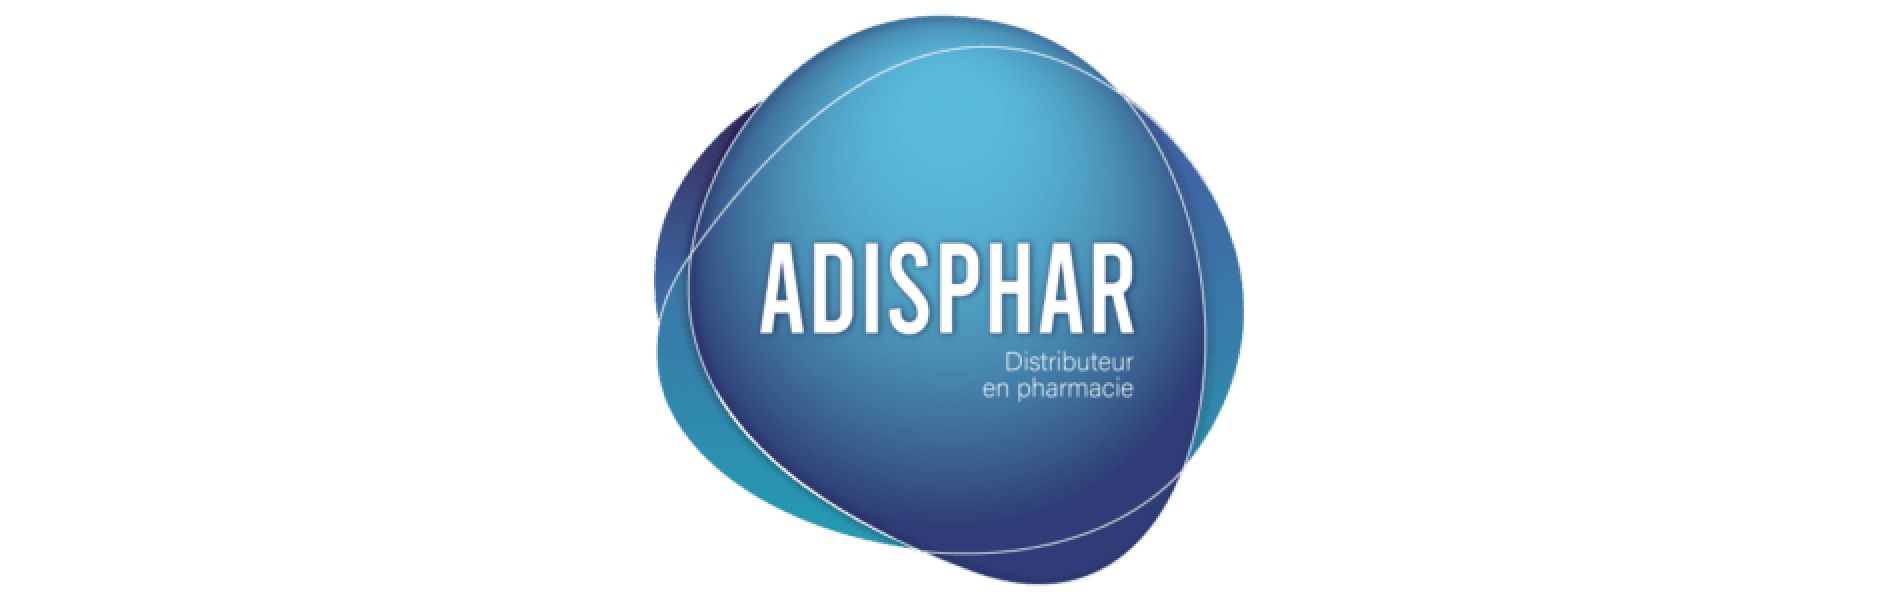 Adisphar